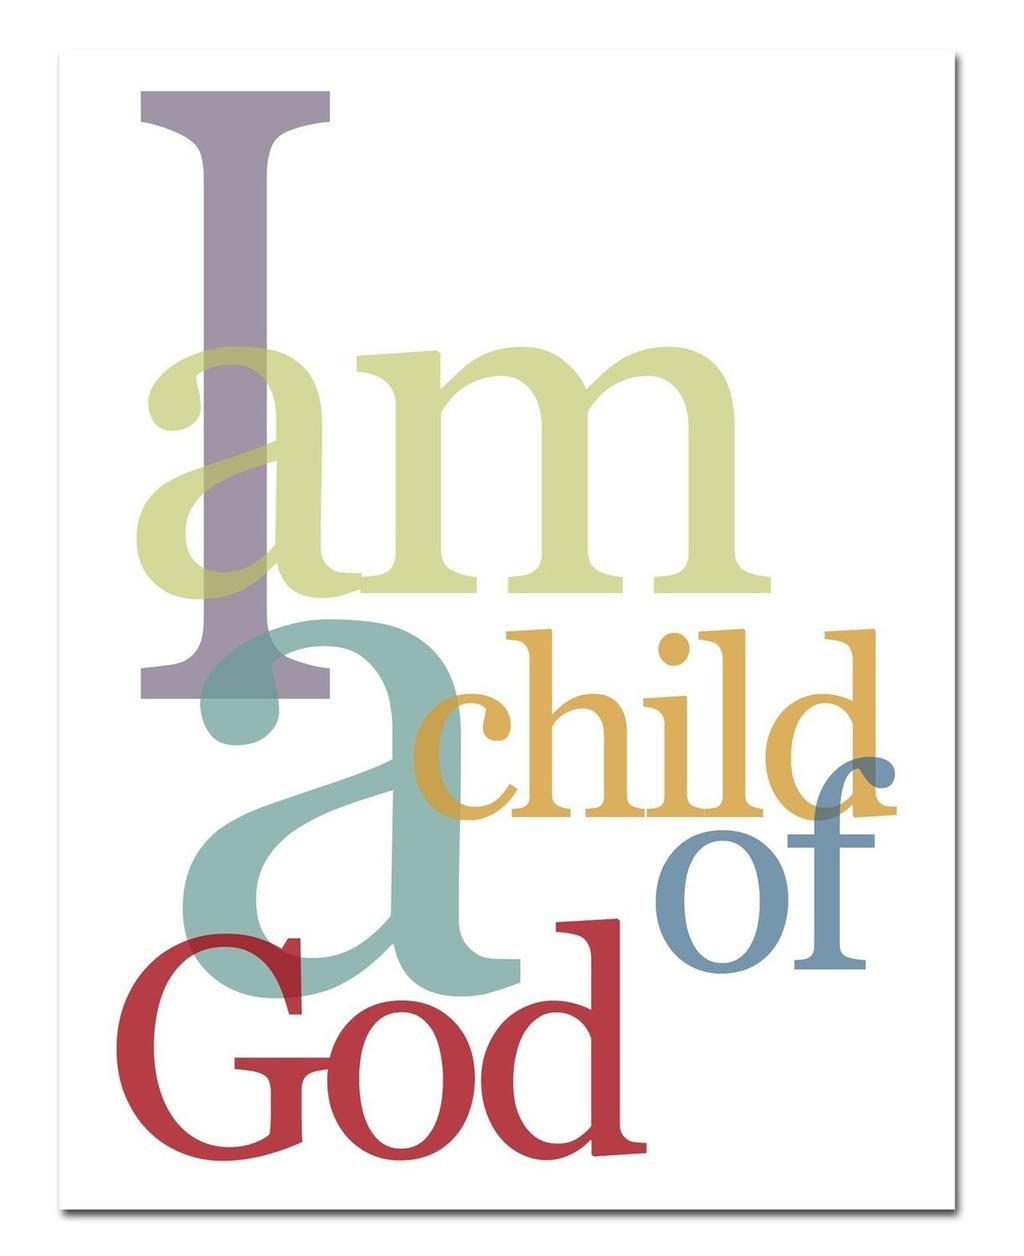 I AM A CHILD OF GOD.